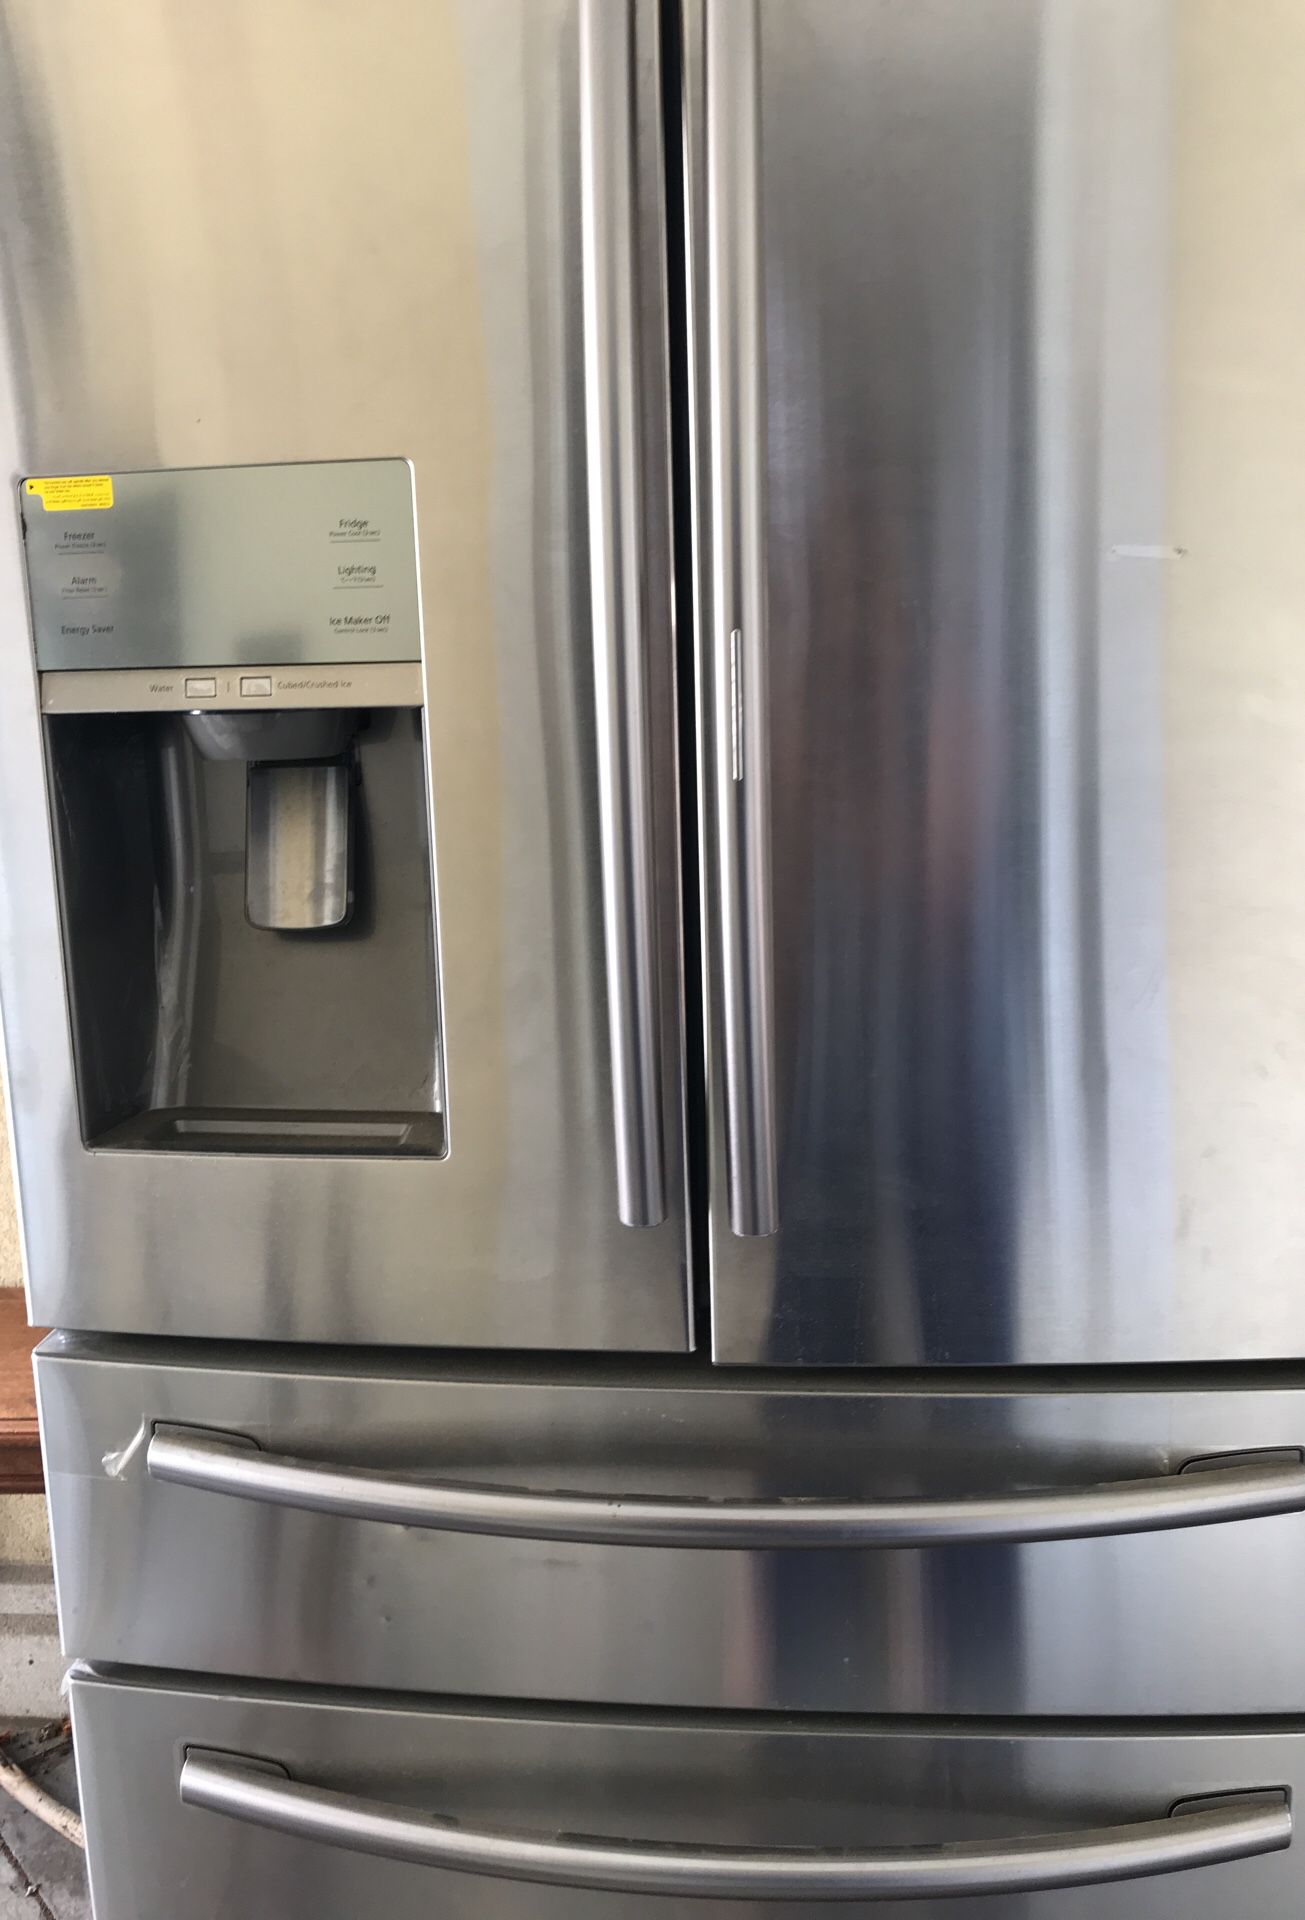 Brand New Samsung Refrigerator! $1199.00